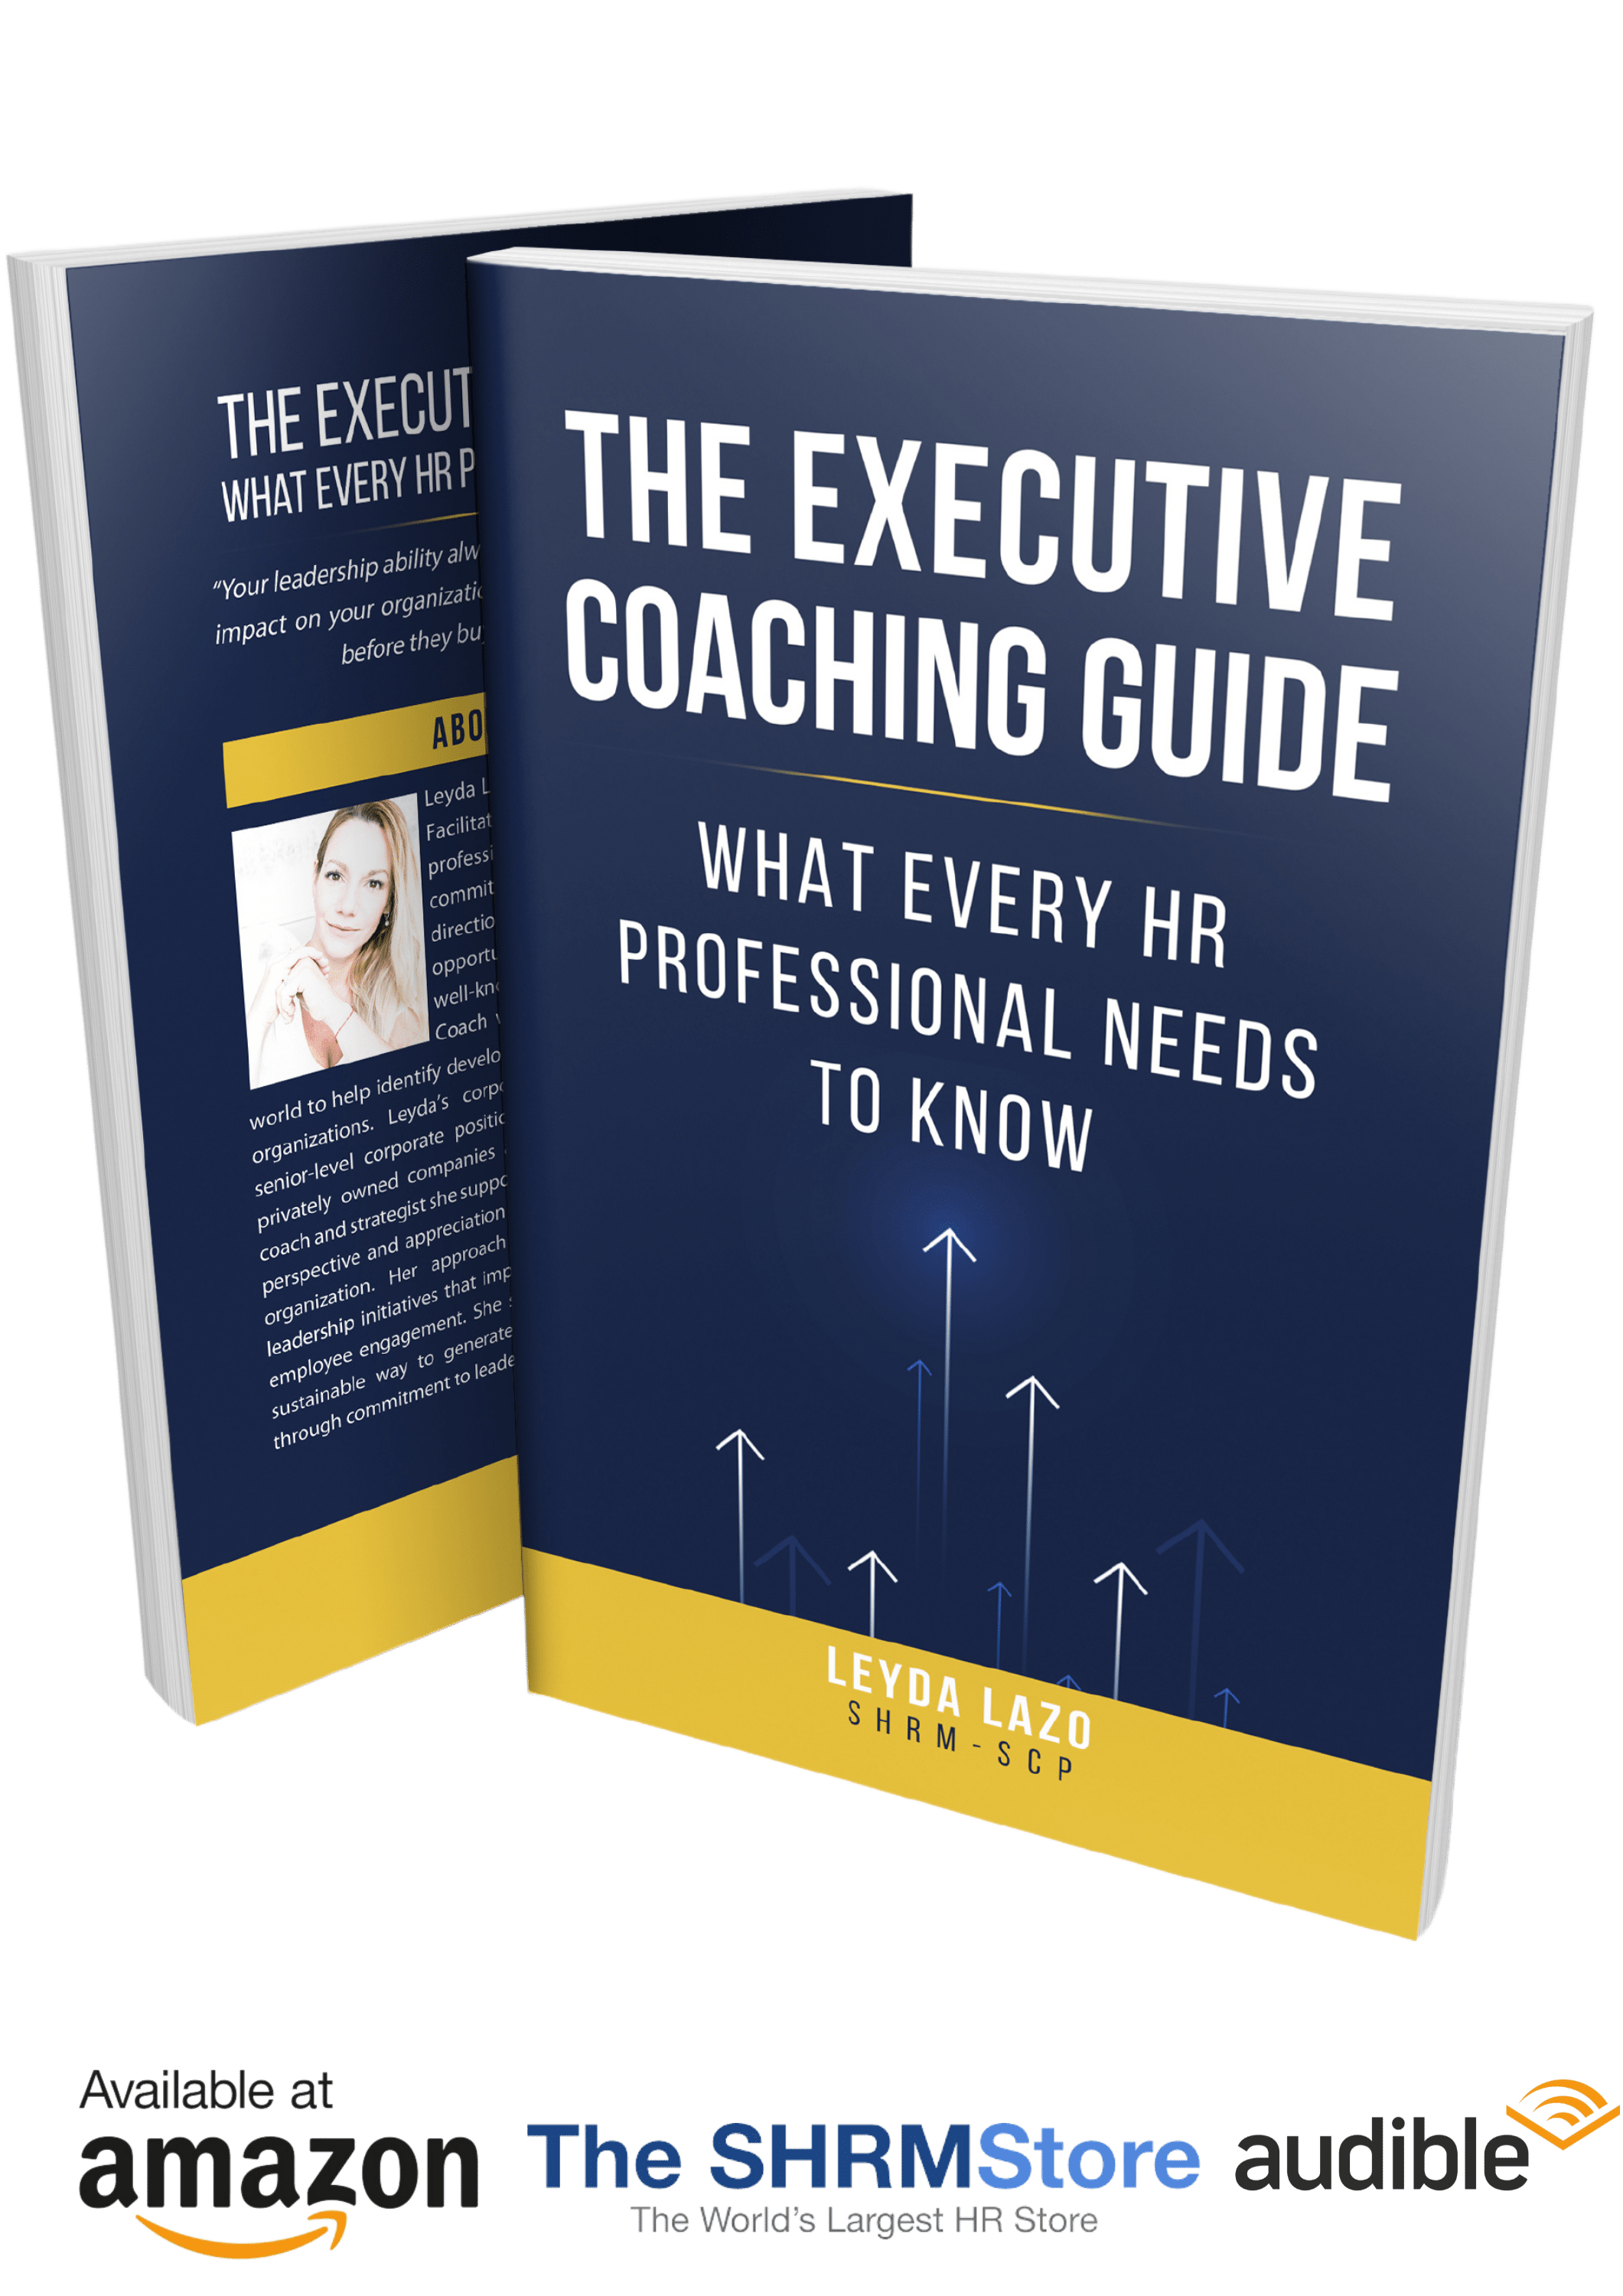 The Executive Coaching Guide by Leyda Lazo